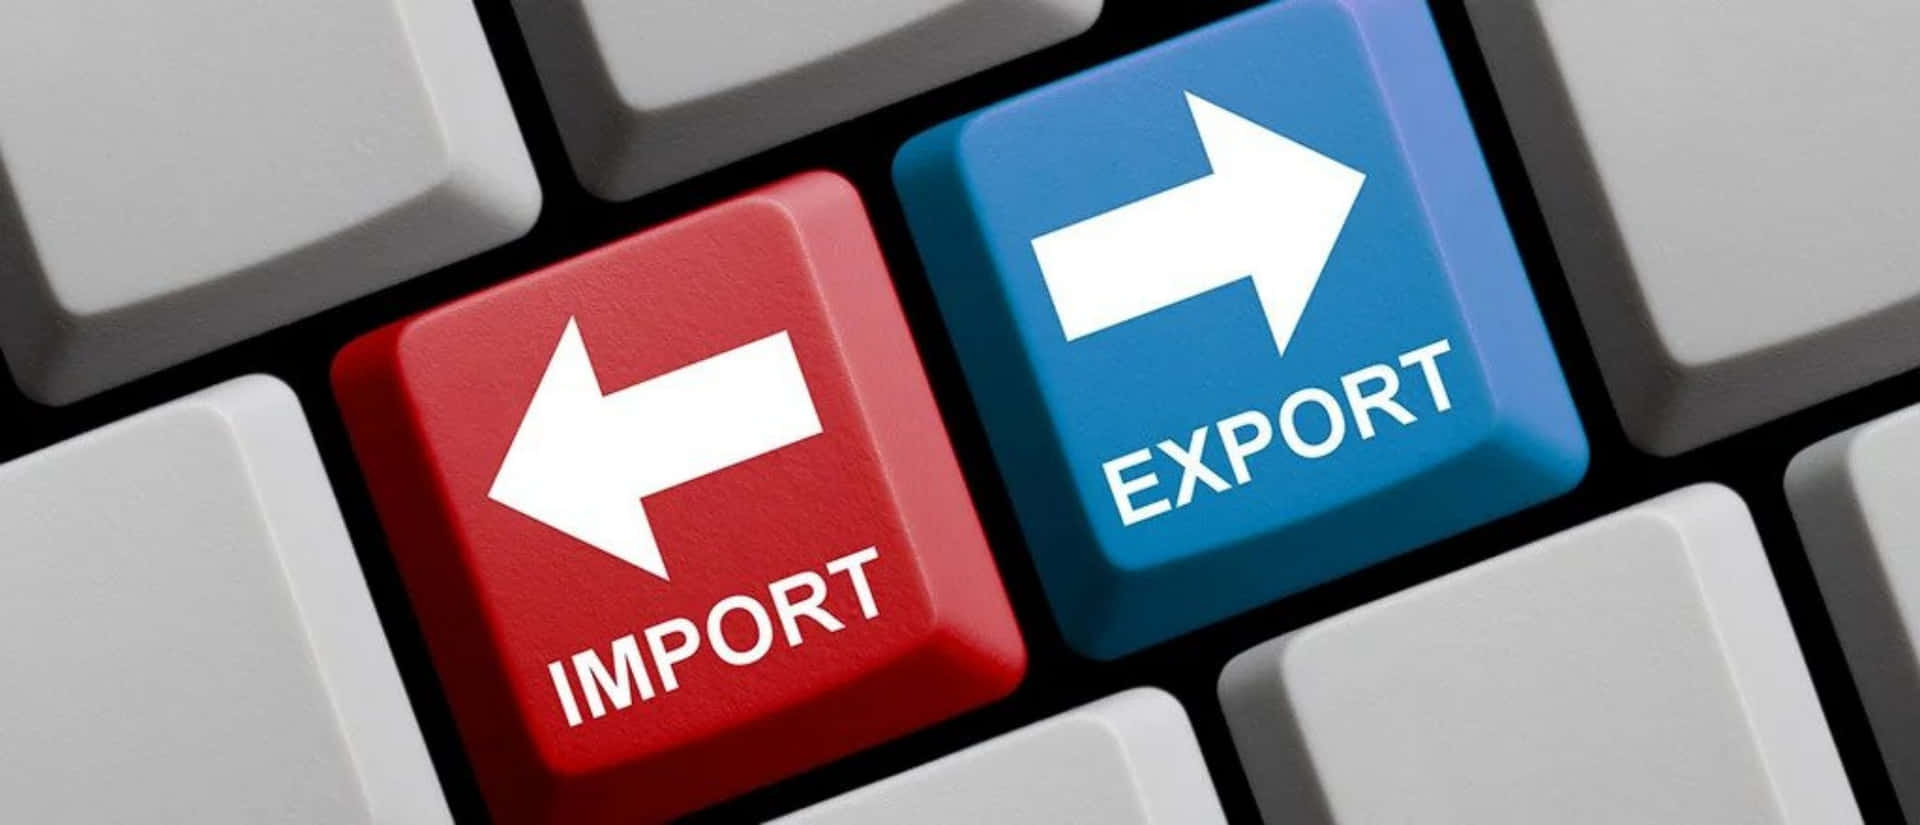 Export Import Keys On A Keyboard